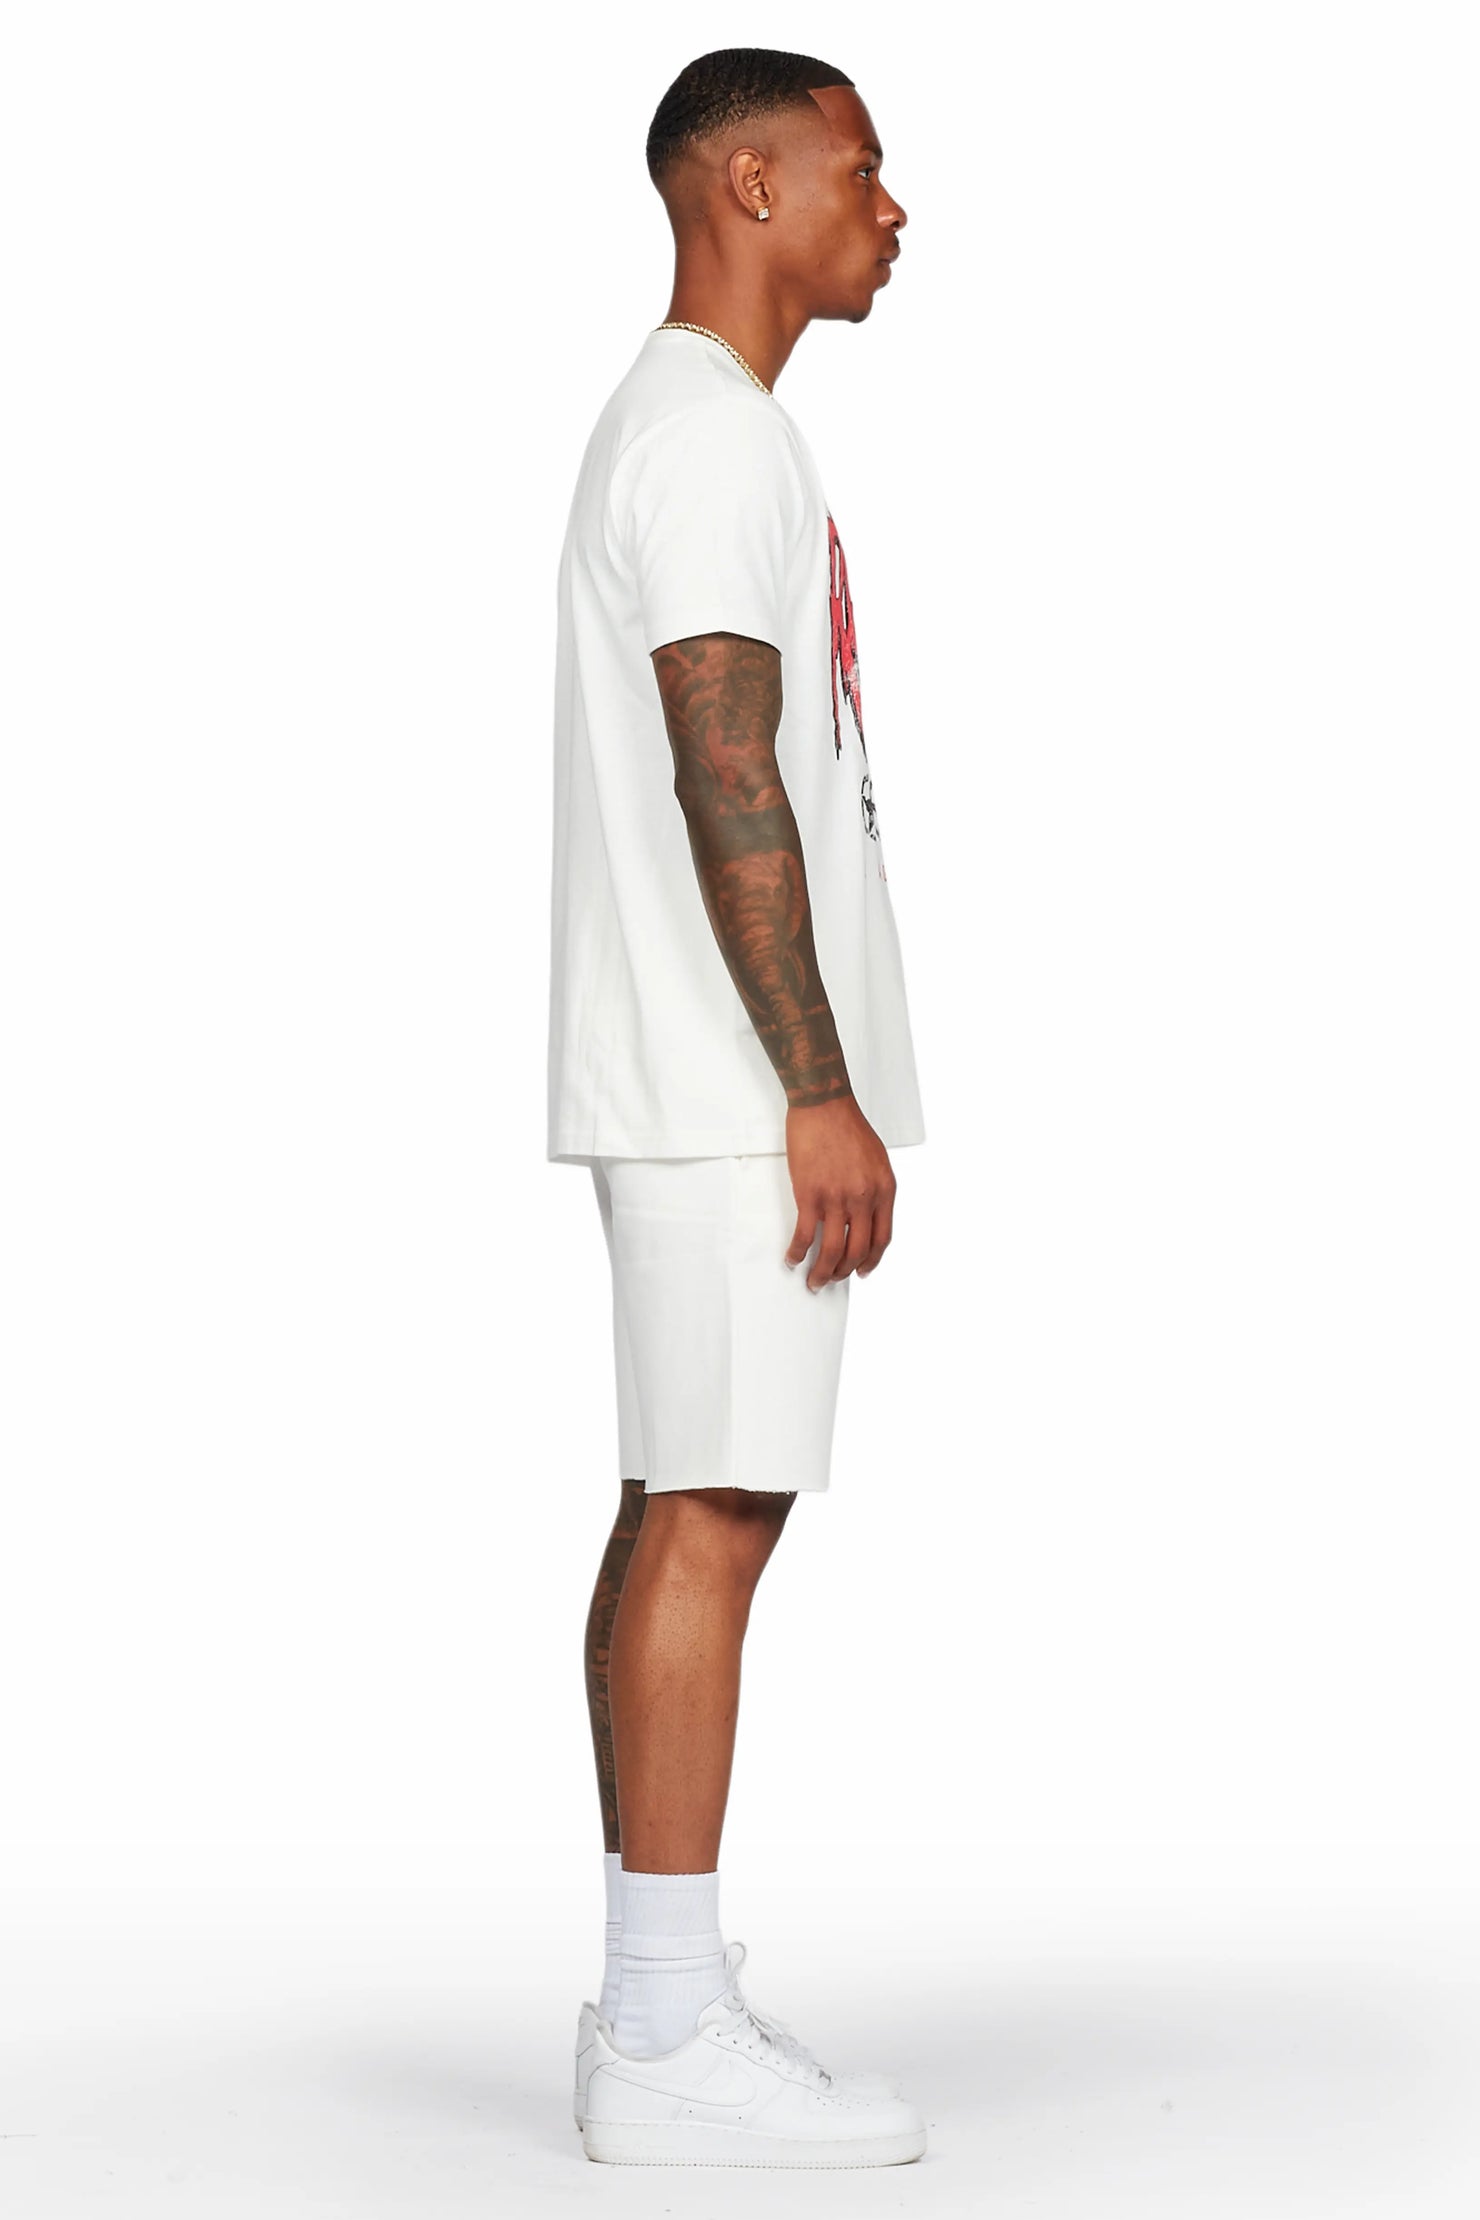 Wizzurd White T-Shirt/Short Set